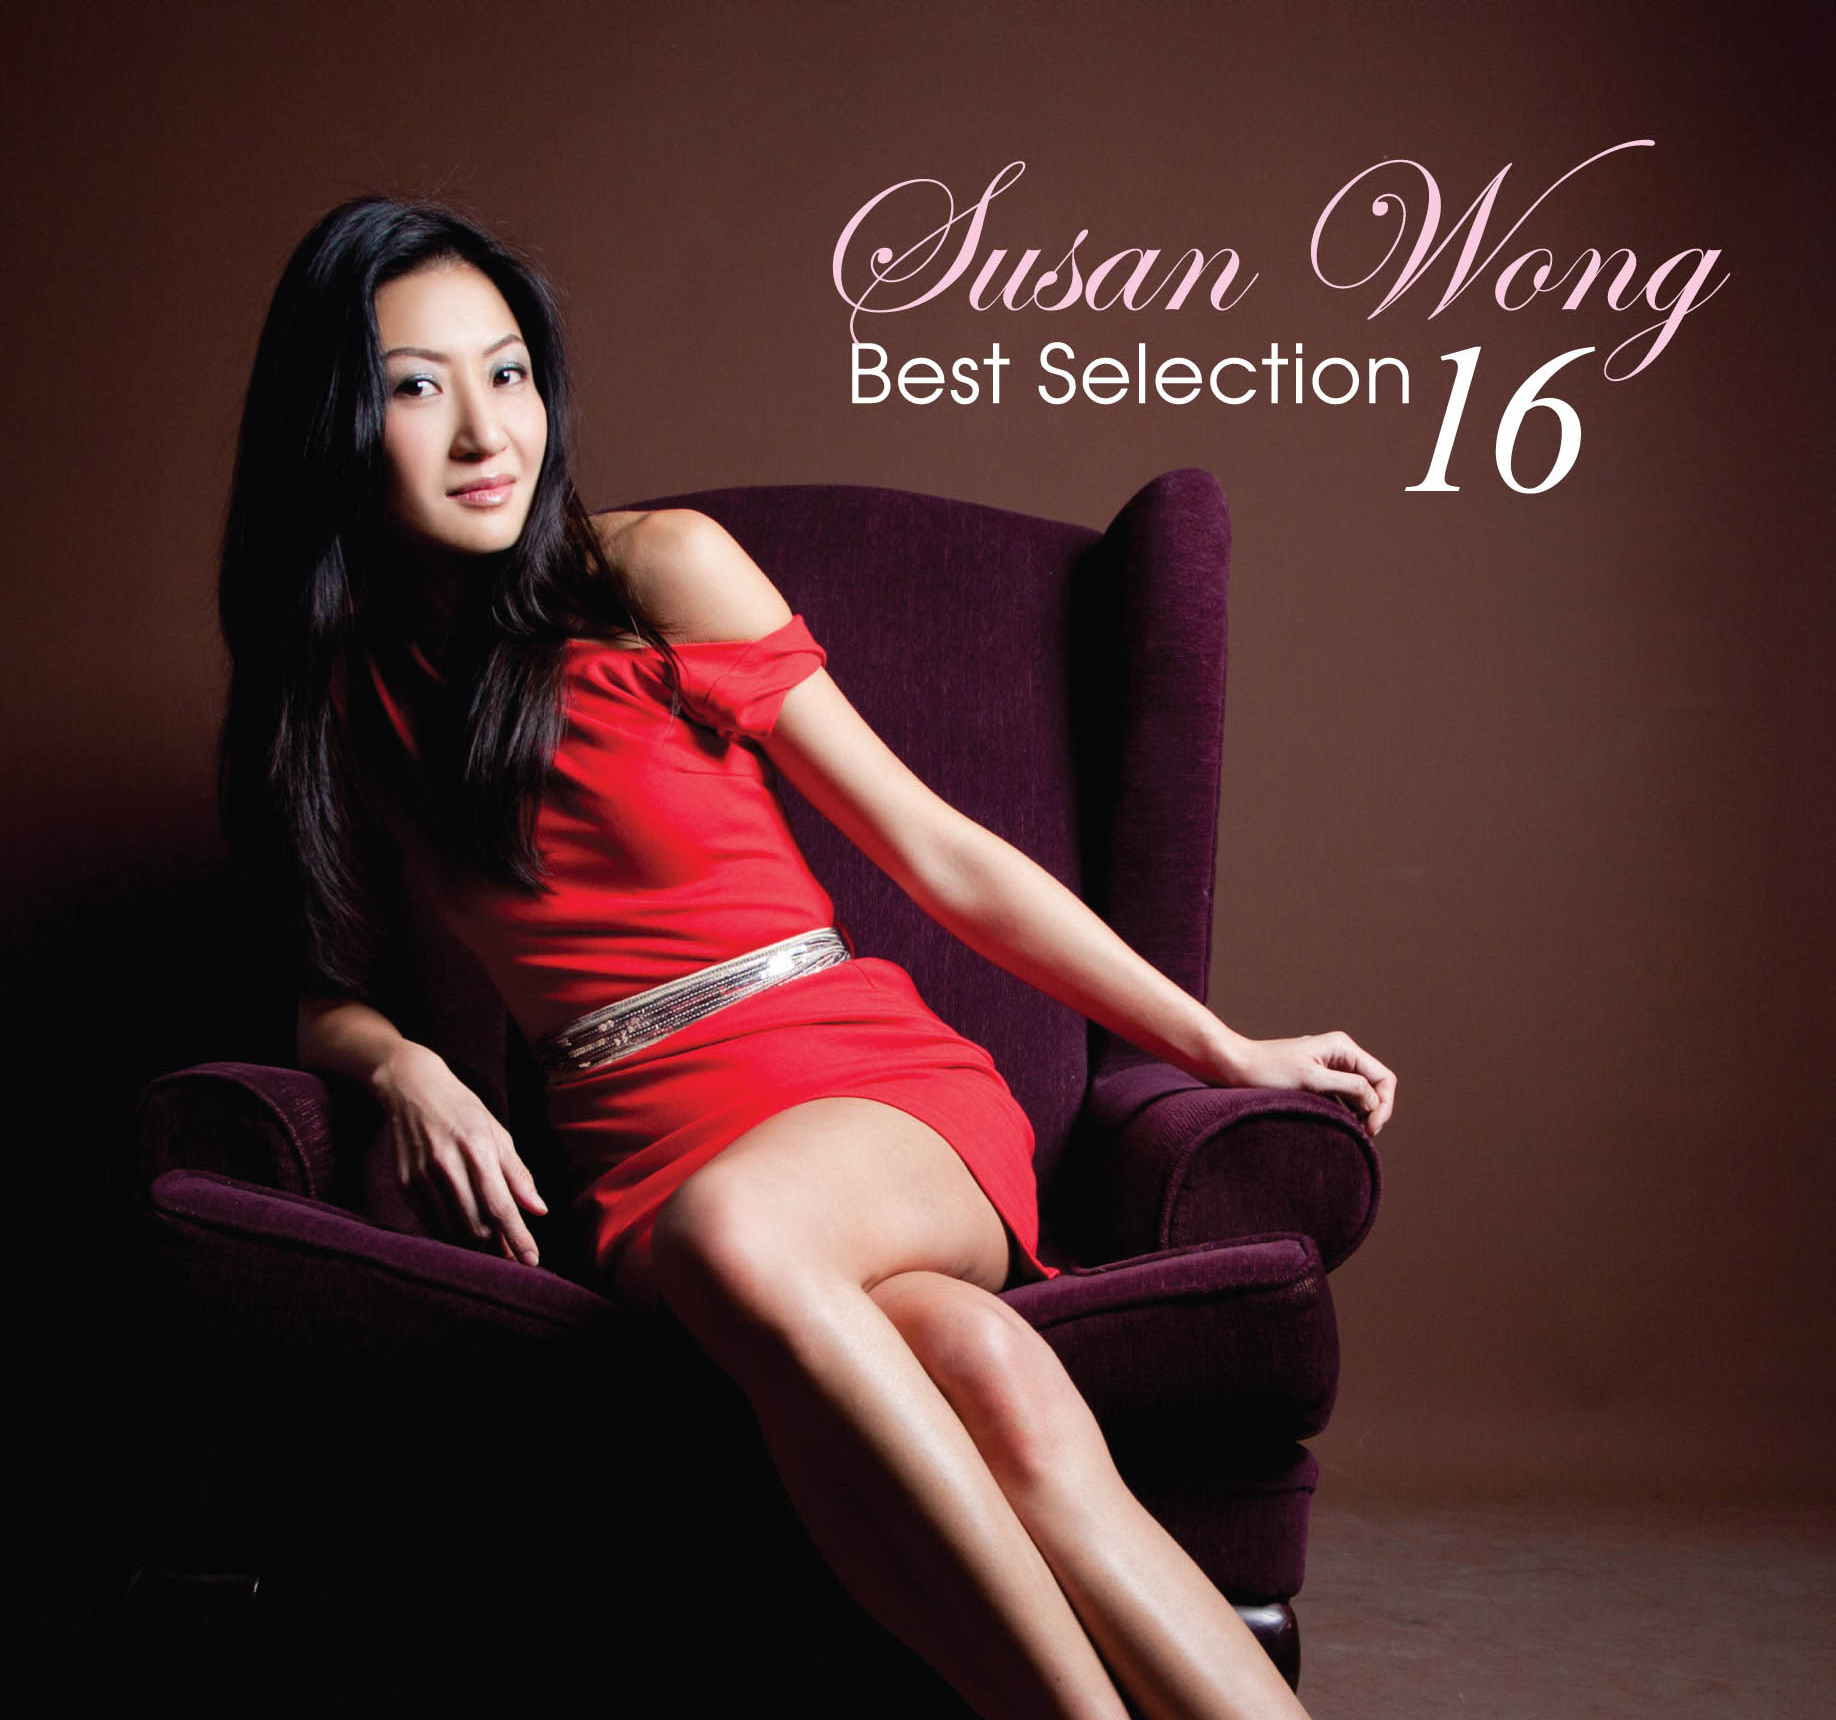 Susan Wong – Best Selection 16 (2011/2012) SACD ISO